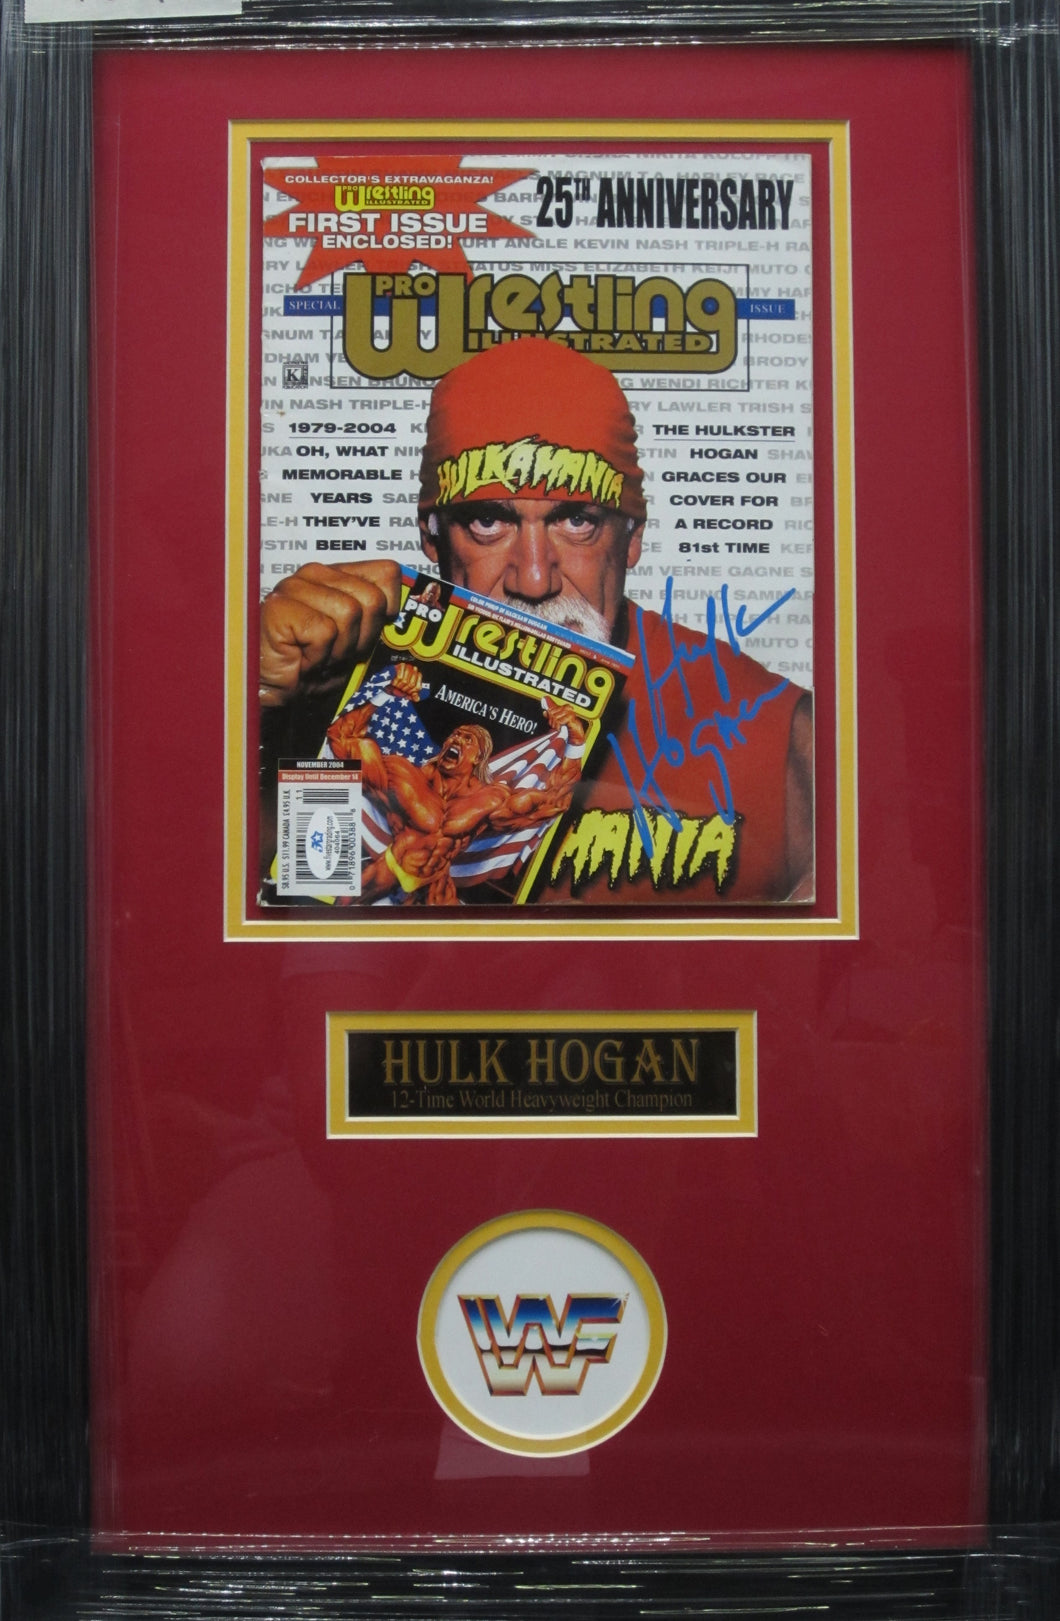 American Professional Wrestler Hulk Hogan Signed 2004 Pro Wrestling Illustrated Magazine Framed & Matted with COA